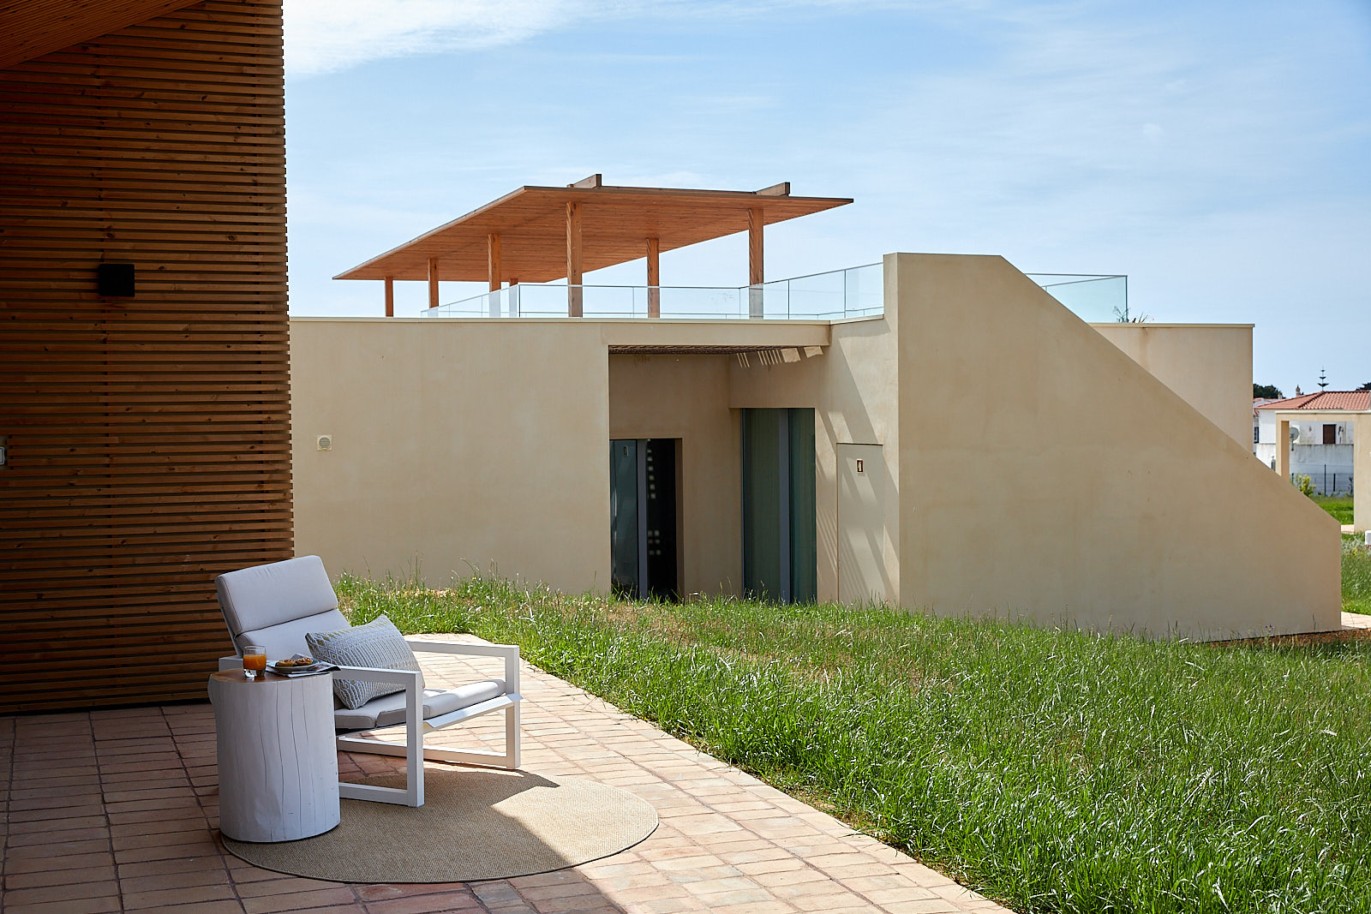 2 bedroom apartment in resort, for sale in Porches, Algarve_228730